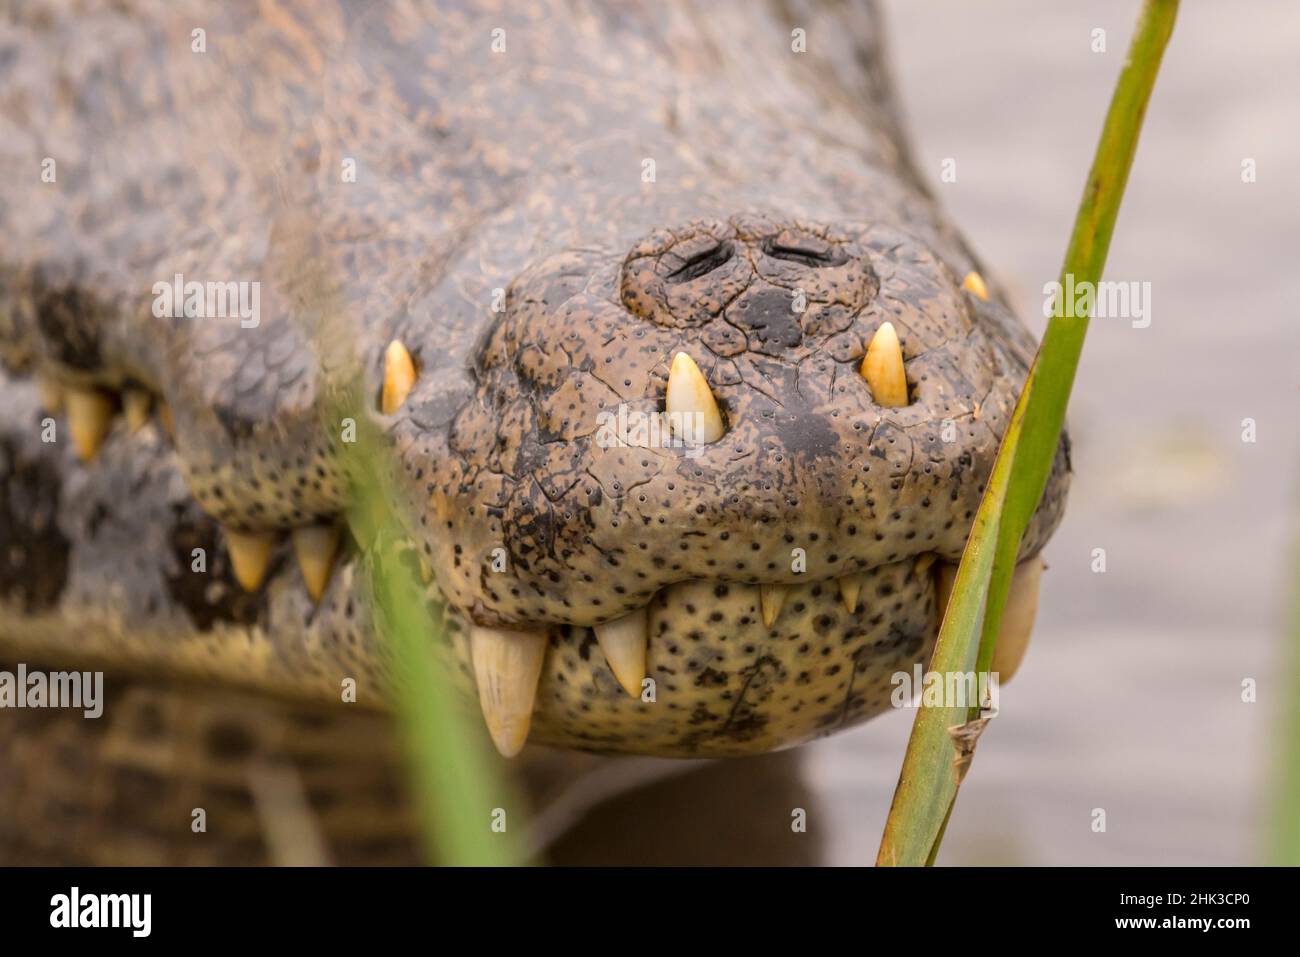 Brazil, Pantanal. Close-up of jacare caiman reptile's snout. Credit as: Cathy & Gordon Illg / Jaynes Gallery / DanitaDelimont.com Stock Photo